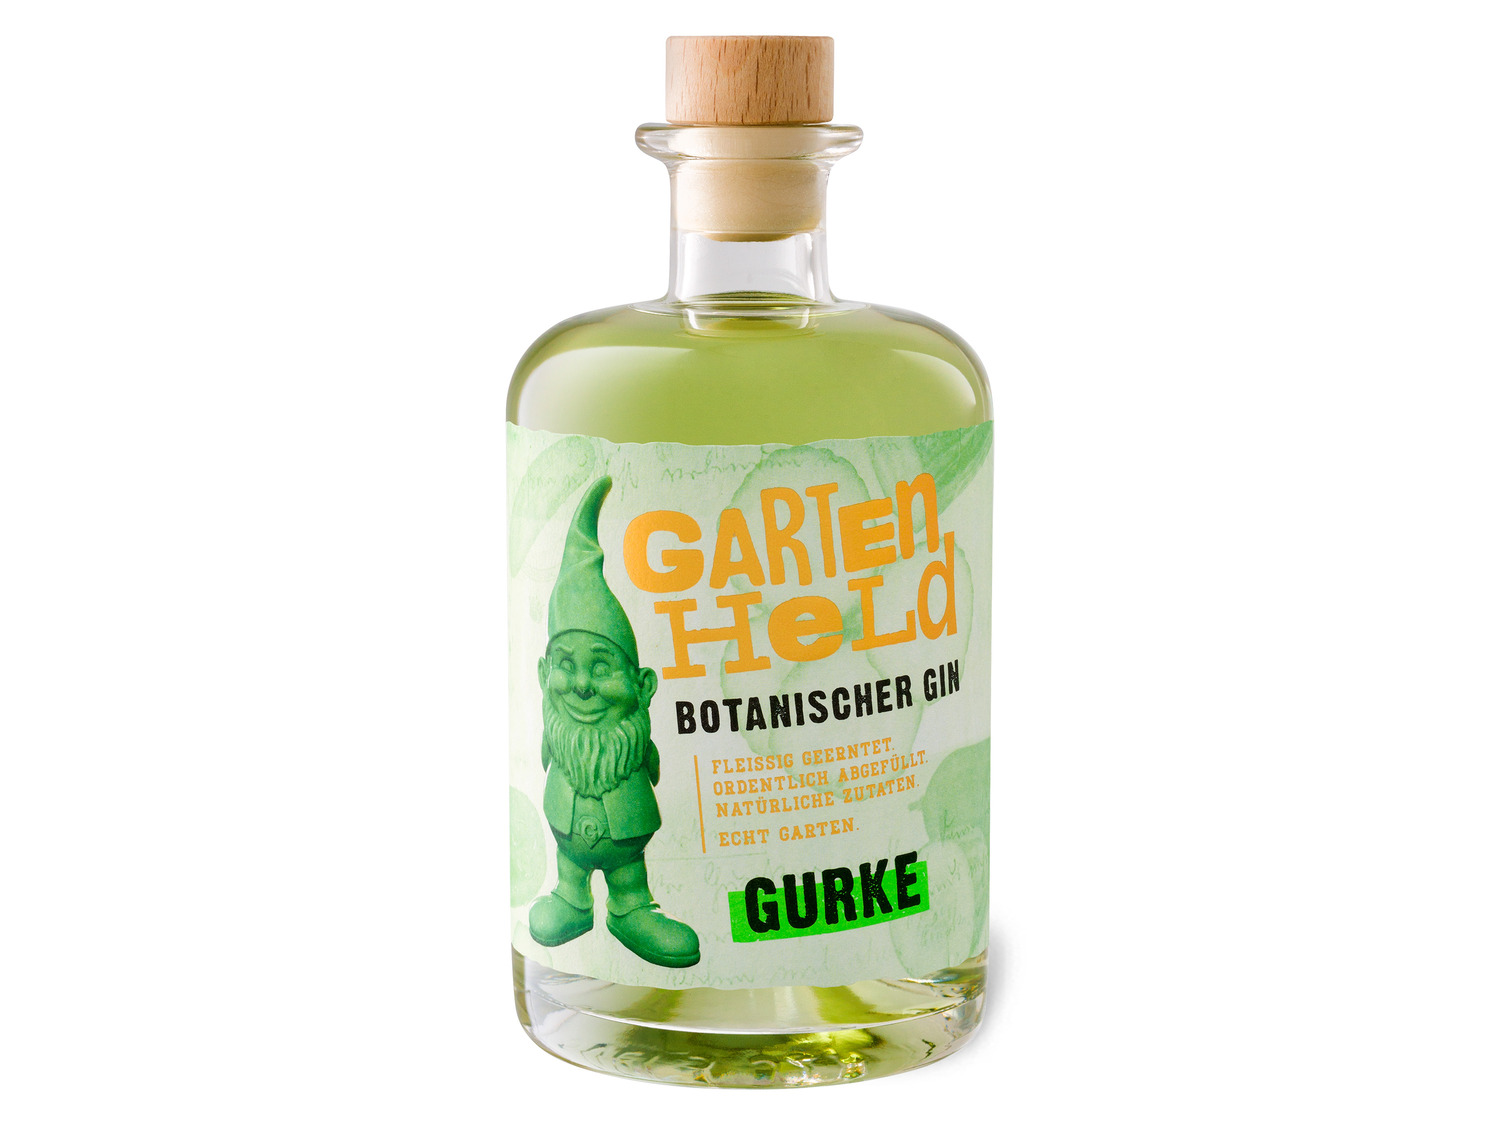 Gartenheld Botanischer Gin Gurke 37 5% Vol